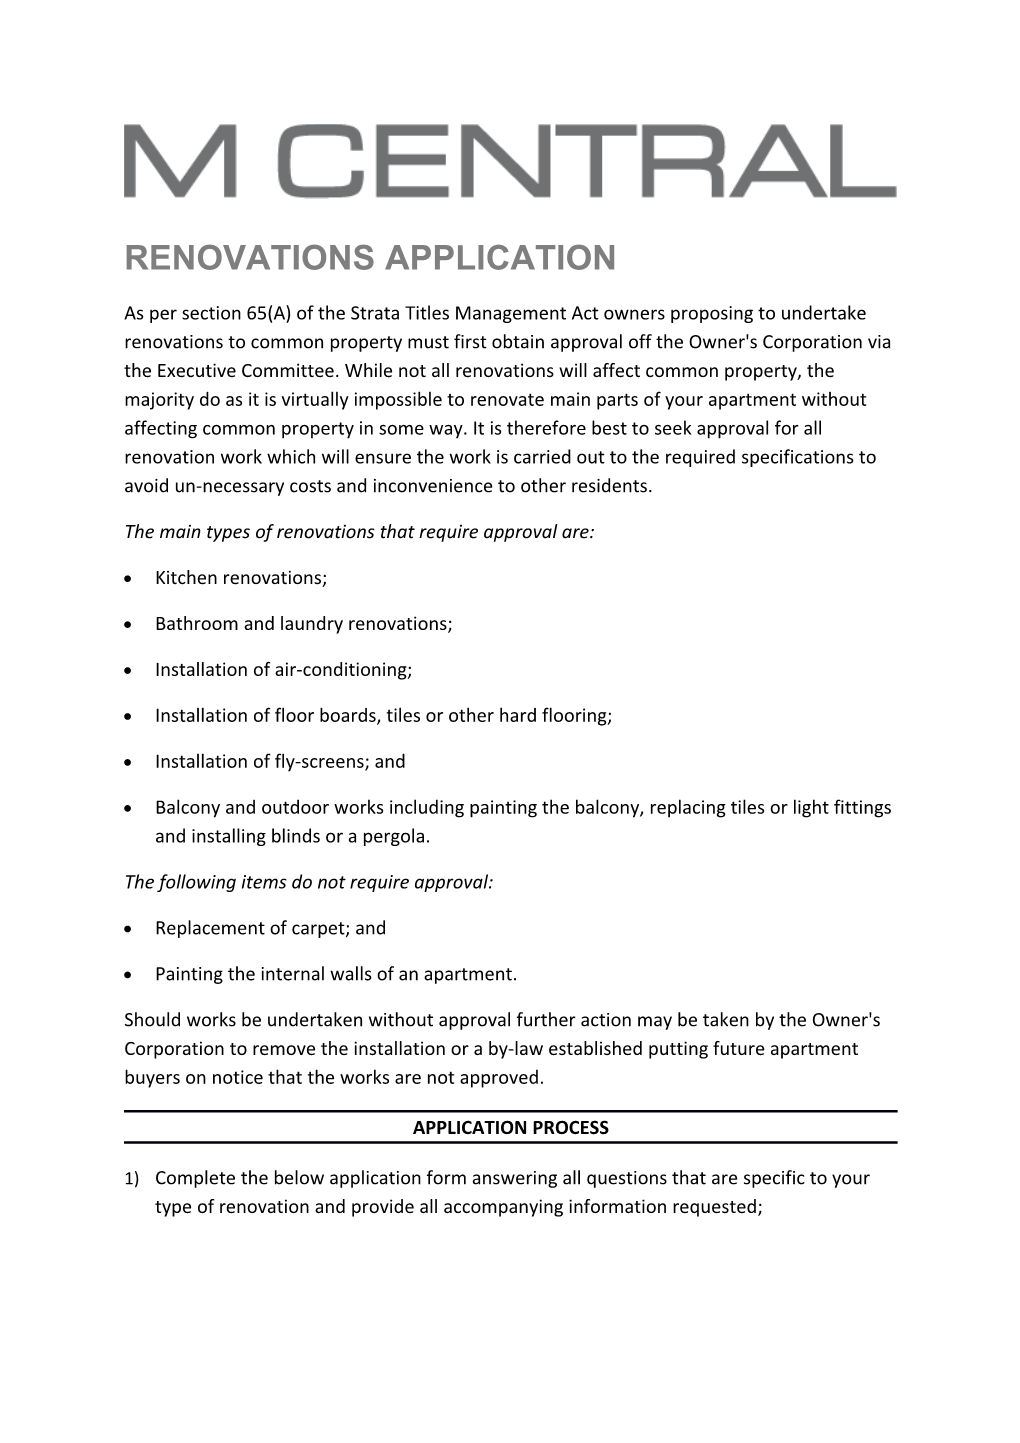 Renovations Application